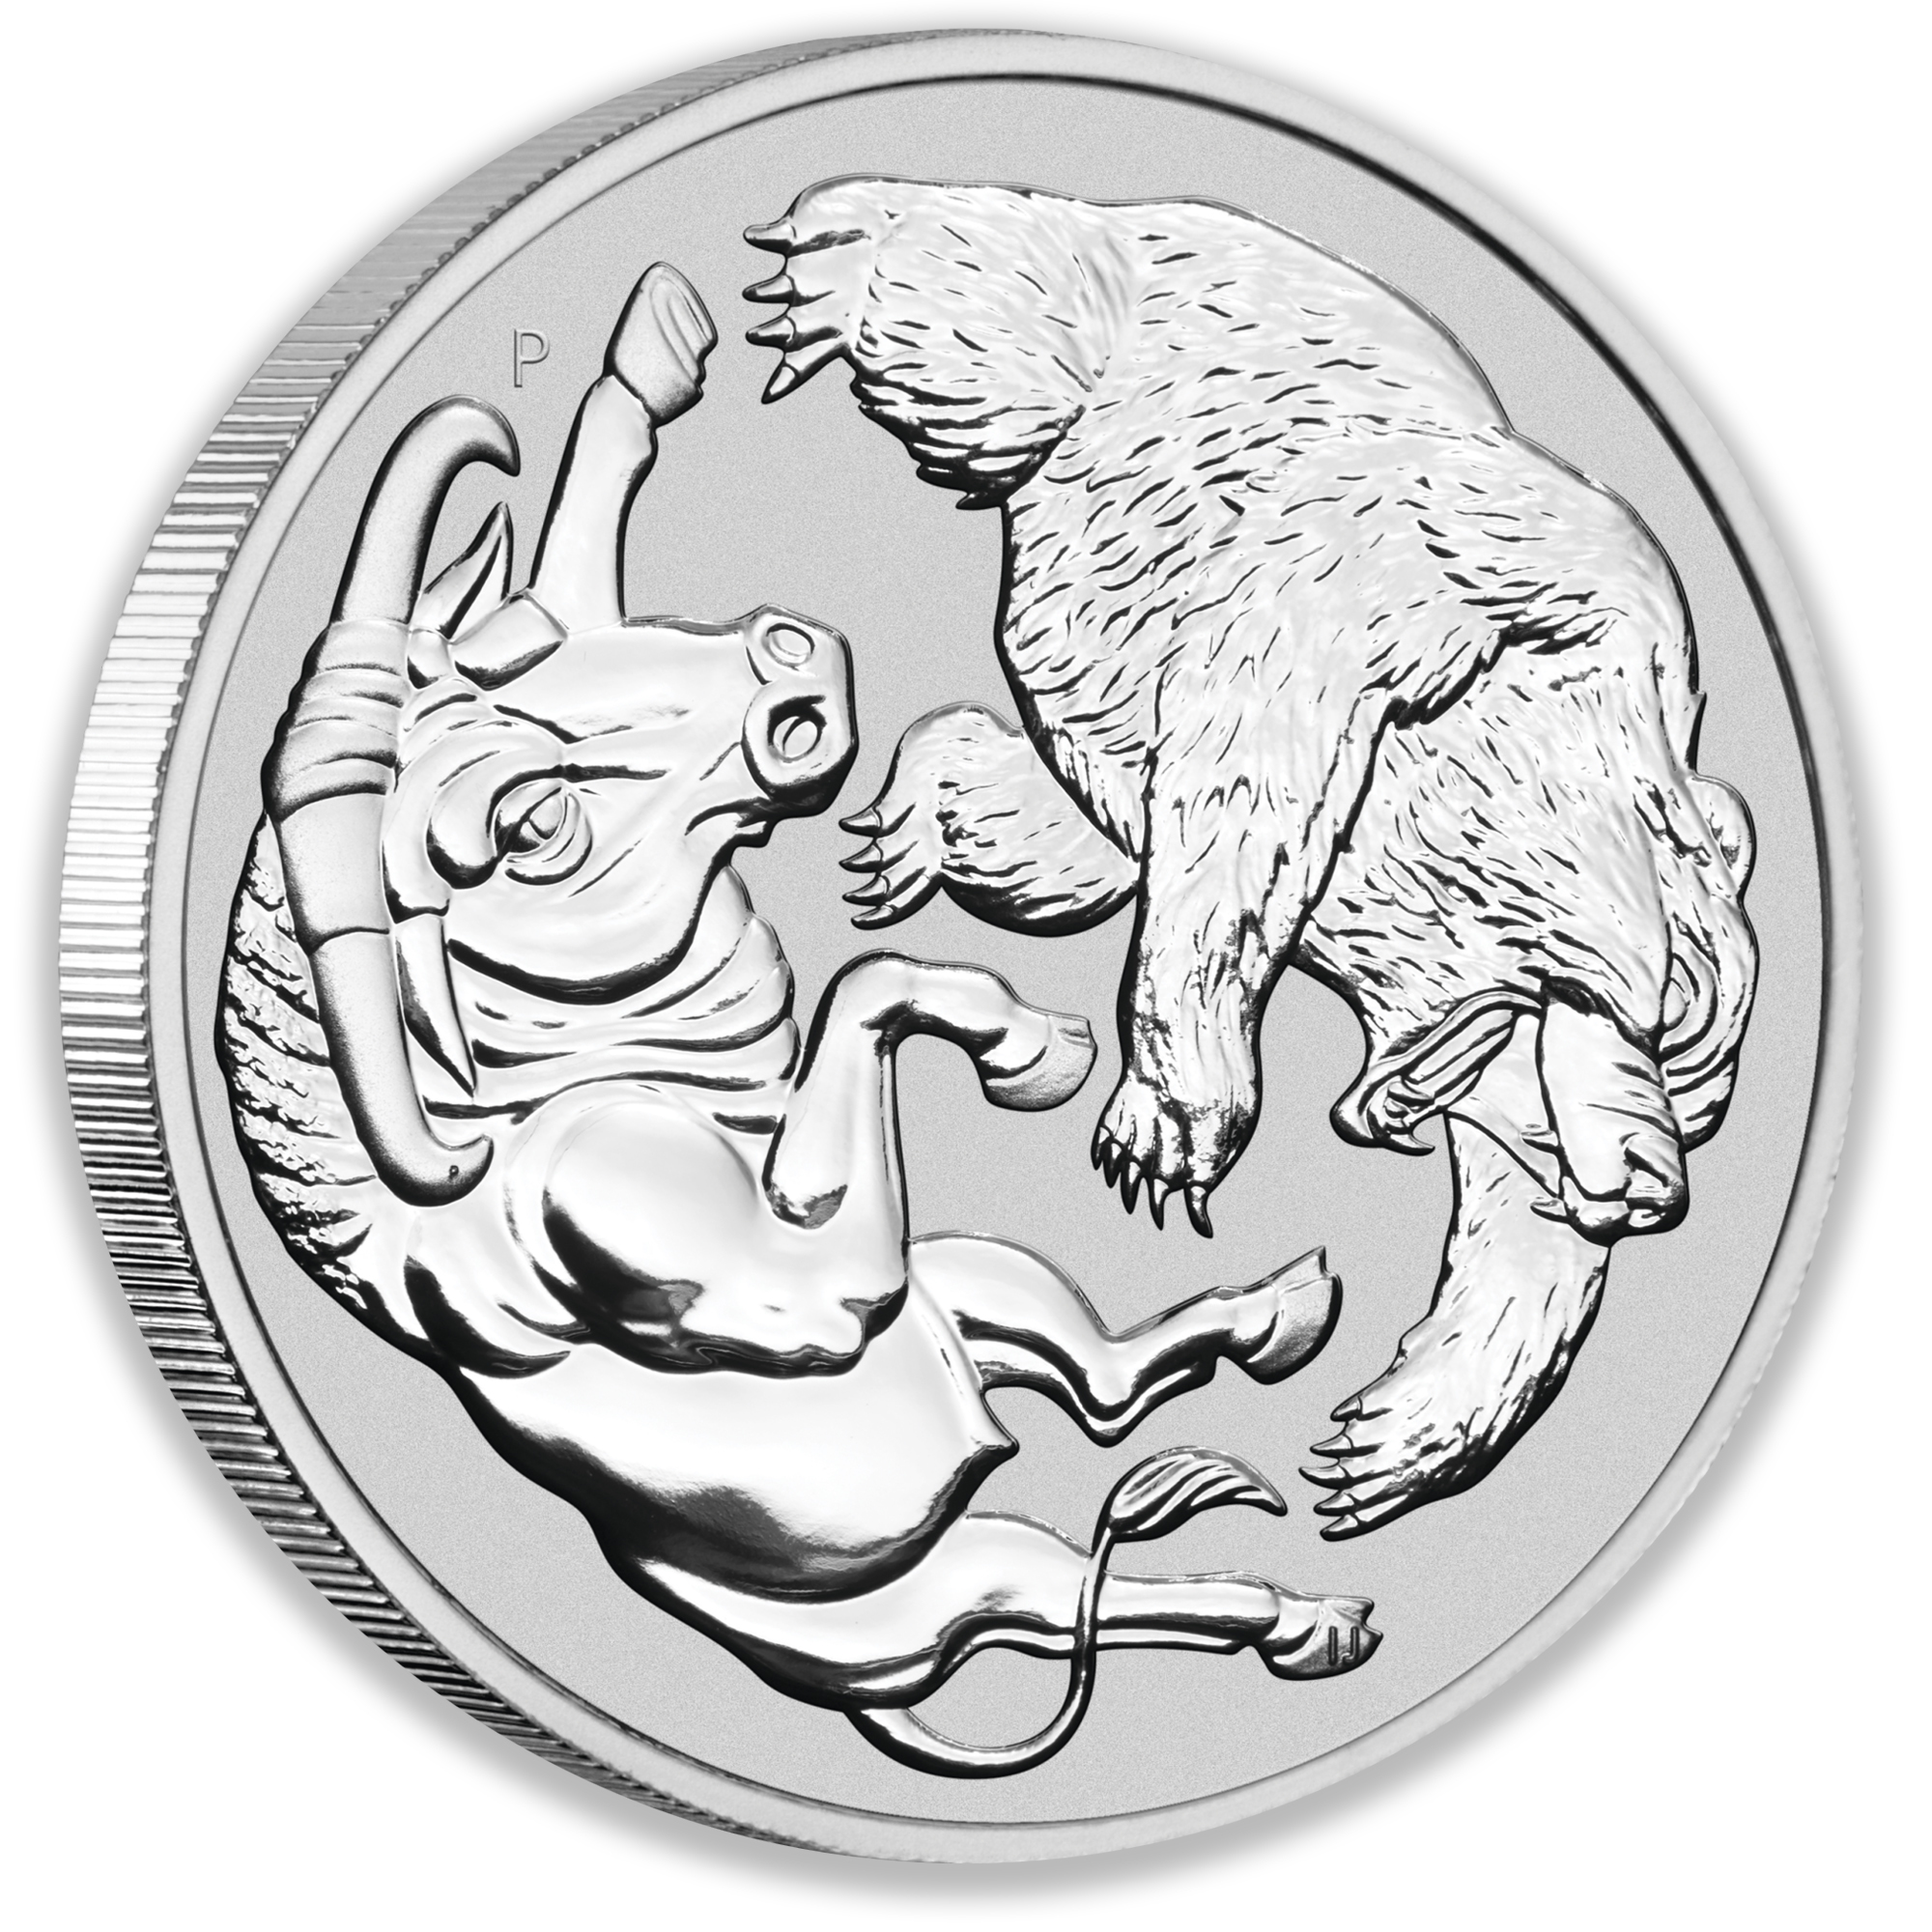 2020 1oz Perth Mint Silver Bull and Bear Coin